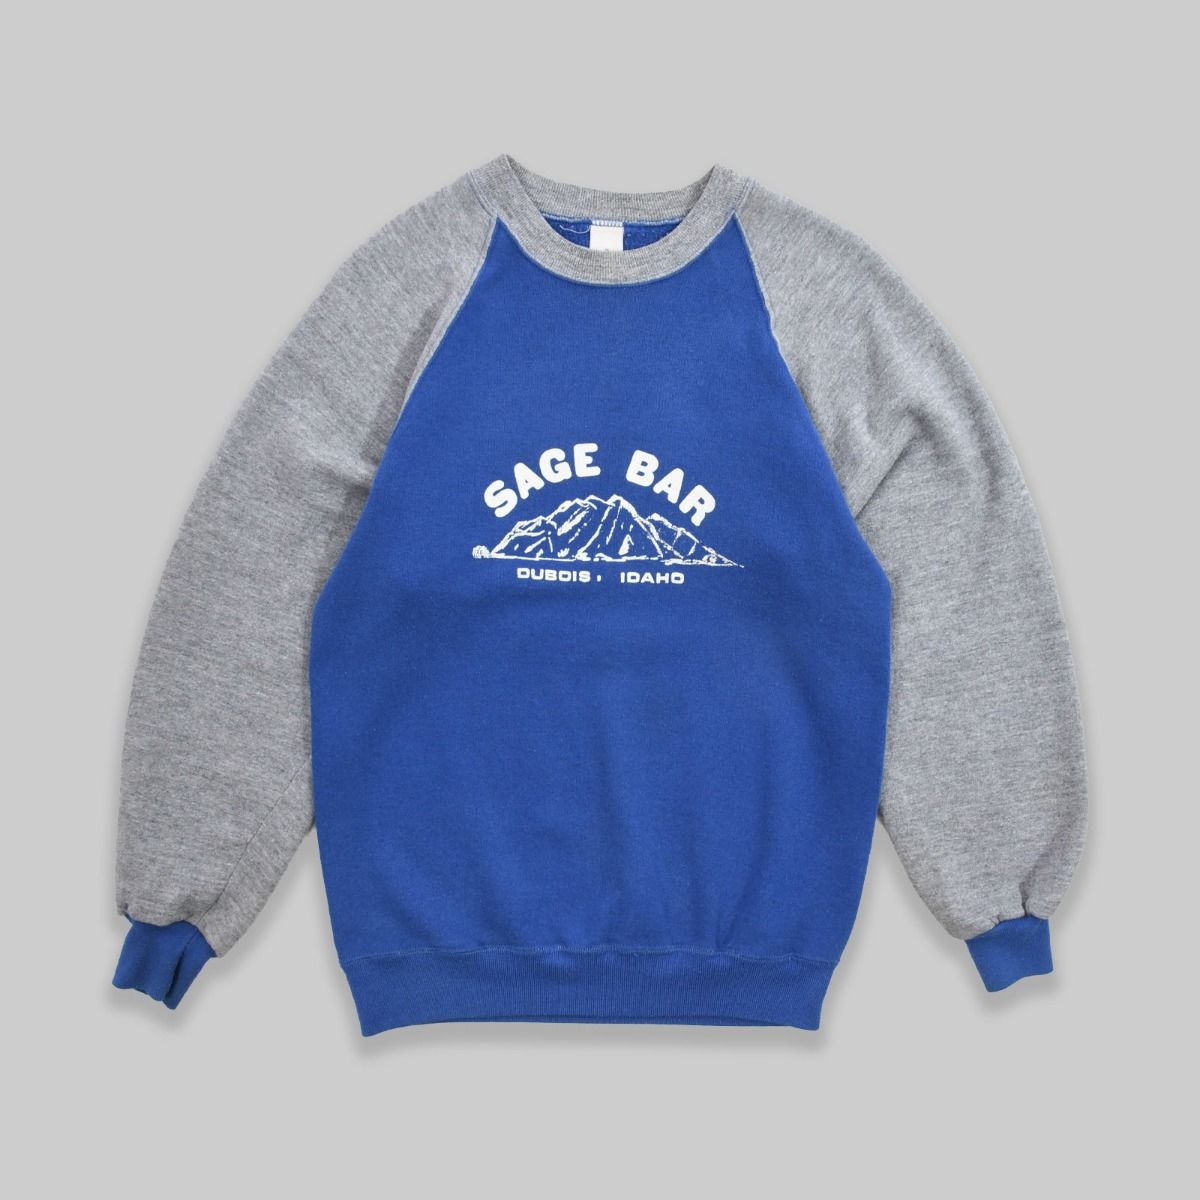 Vintage 1980s Sage Bar Sweatshirt